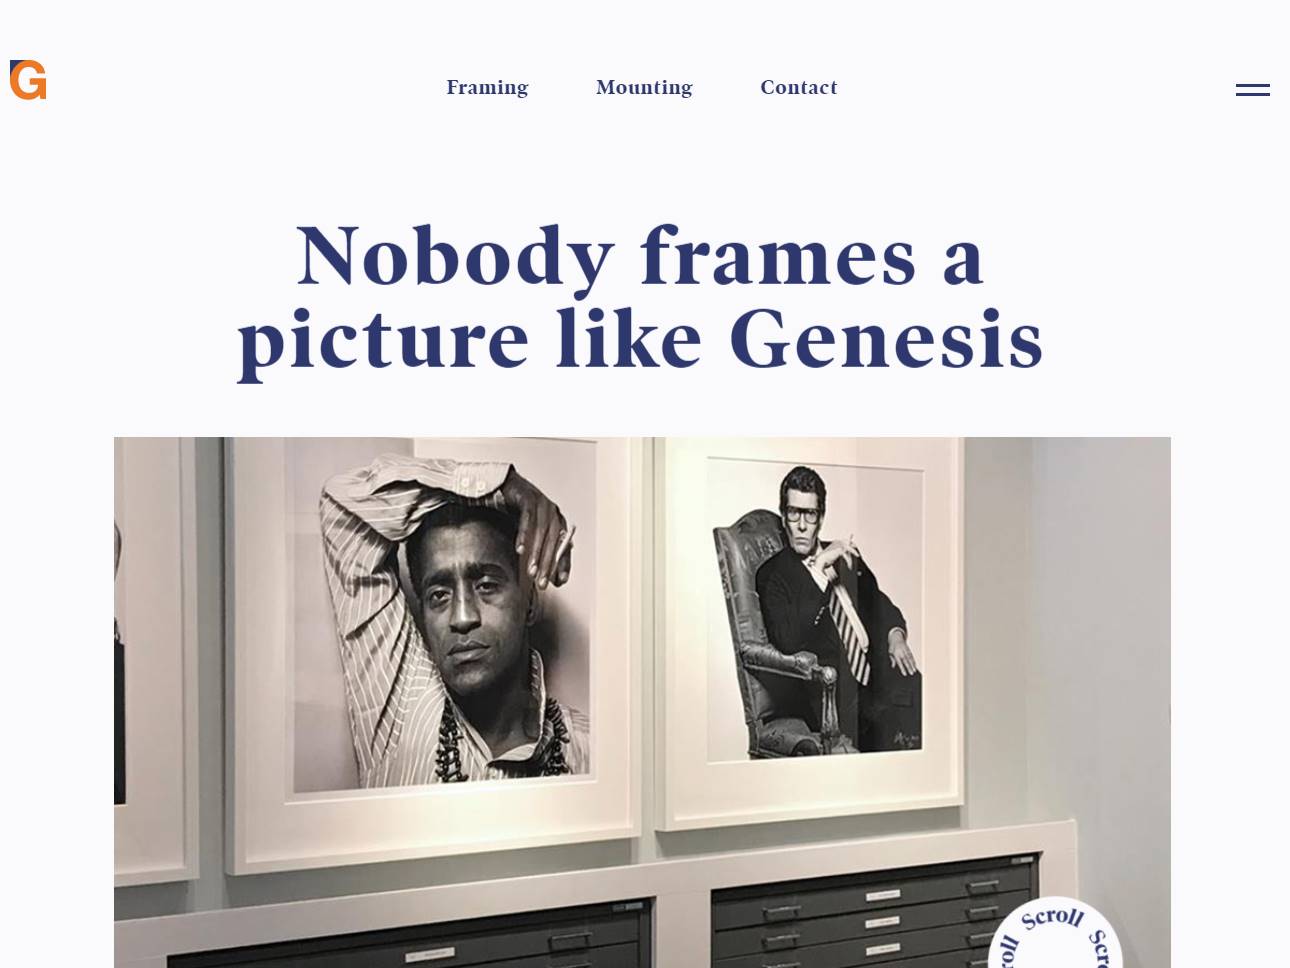 Genesis Framing